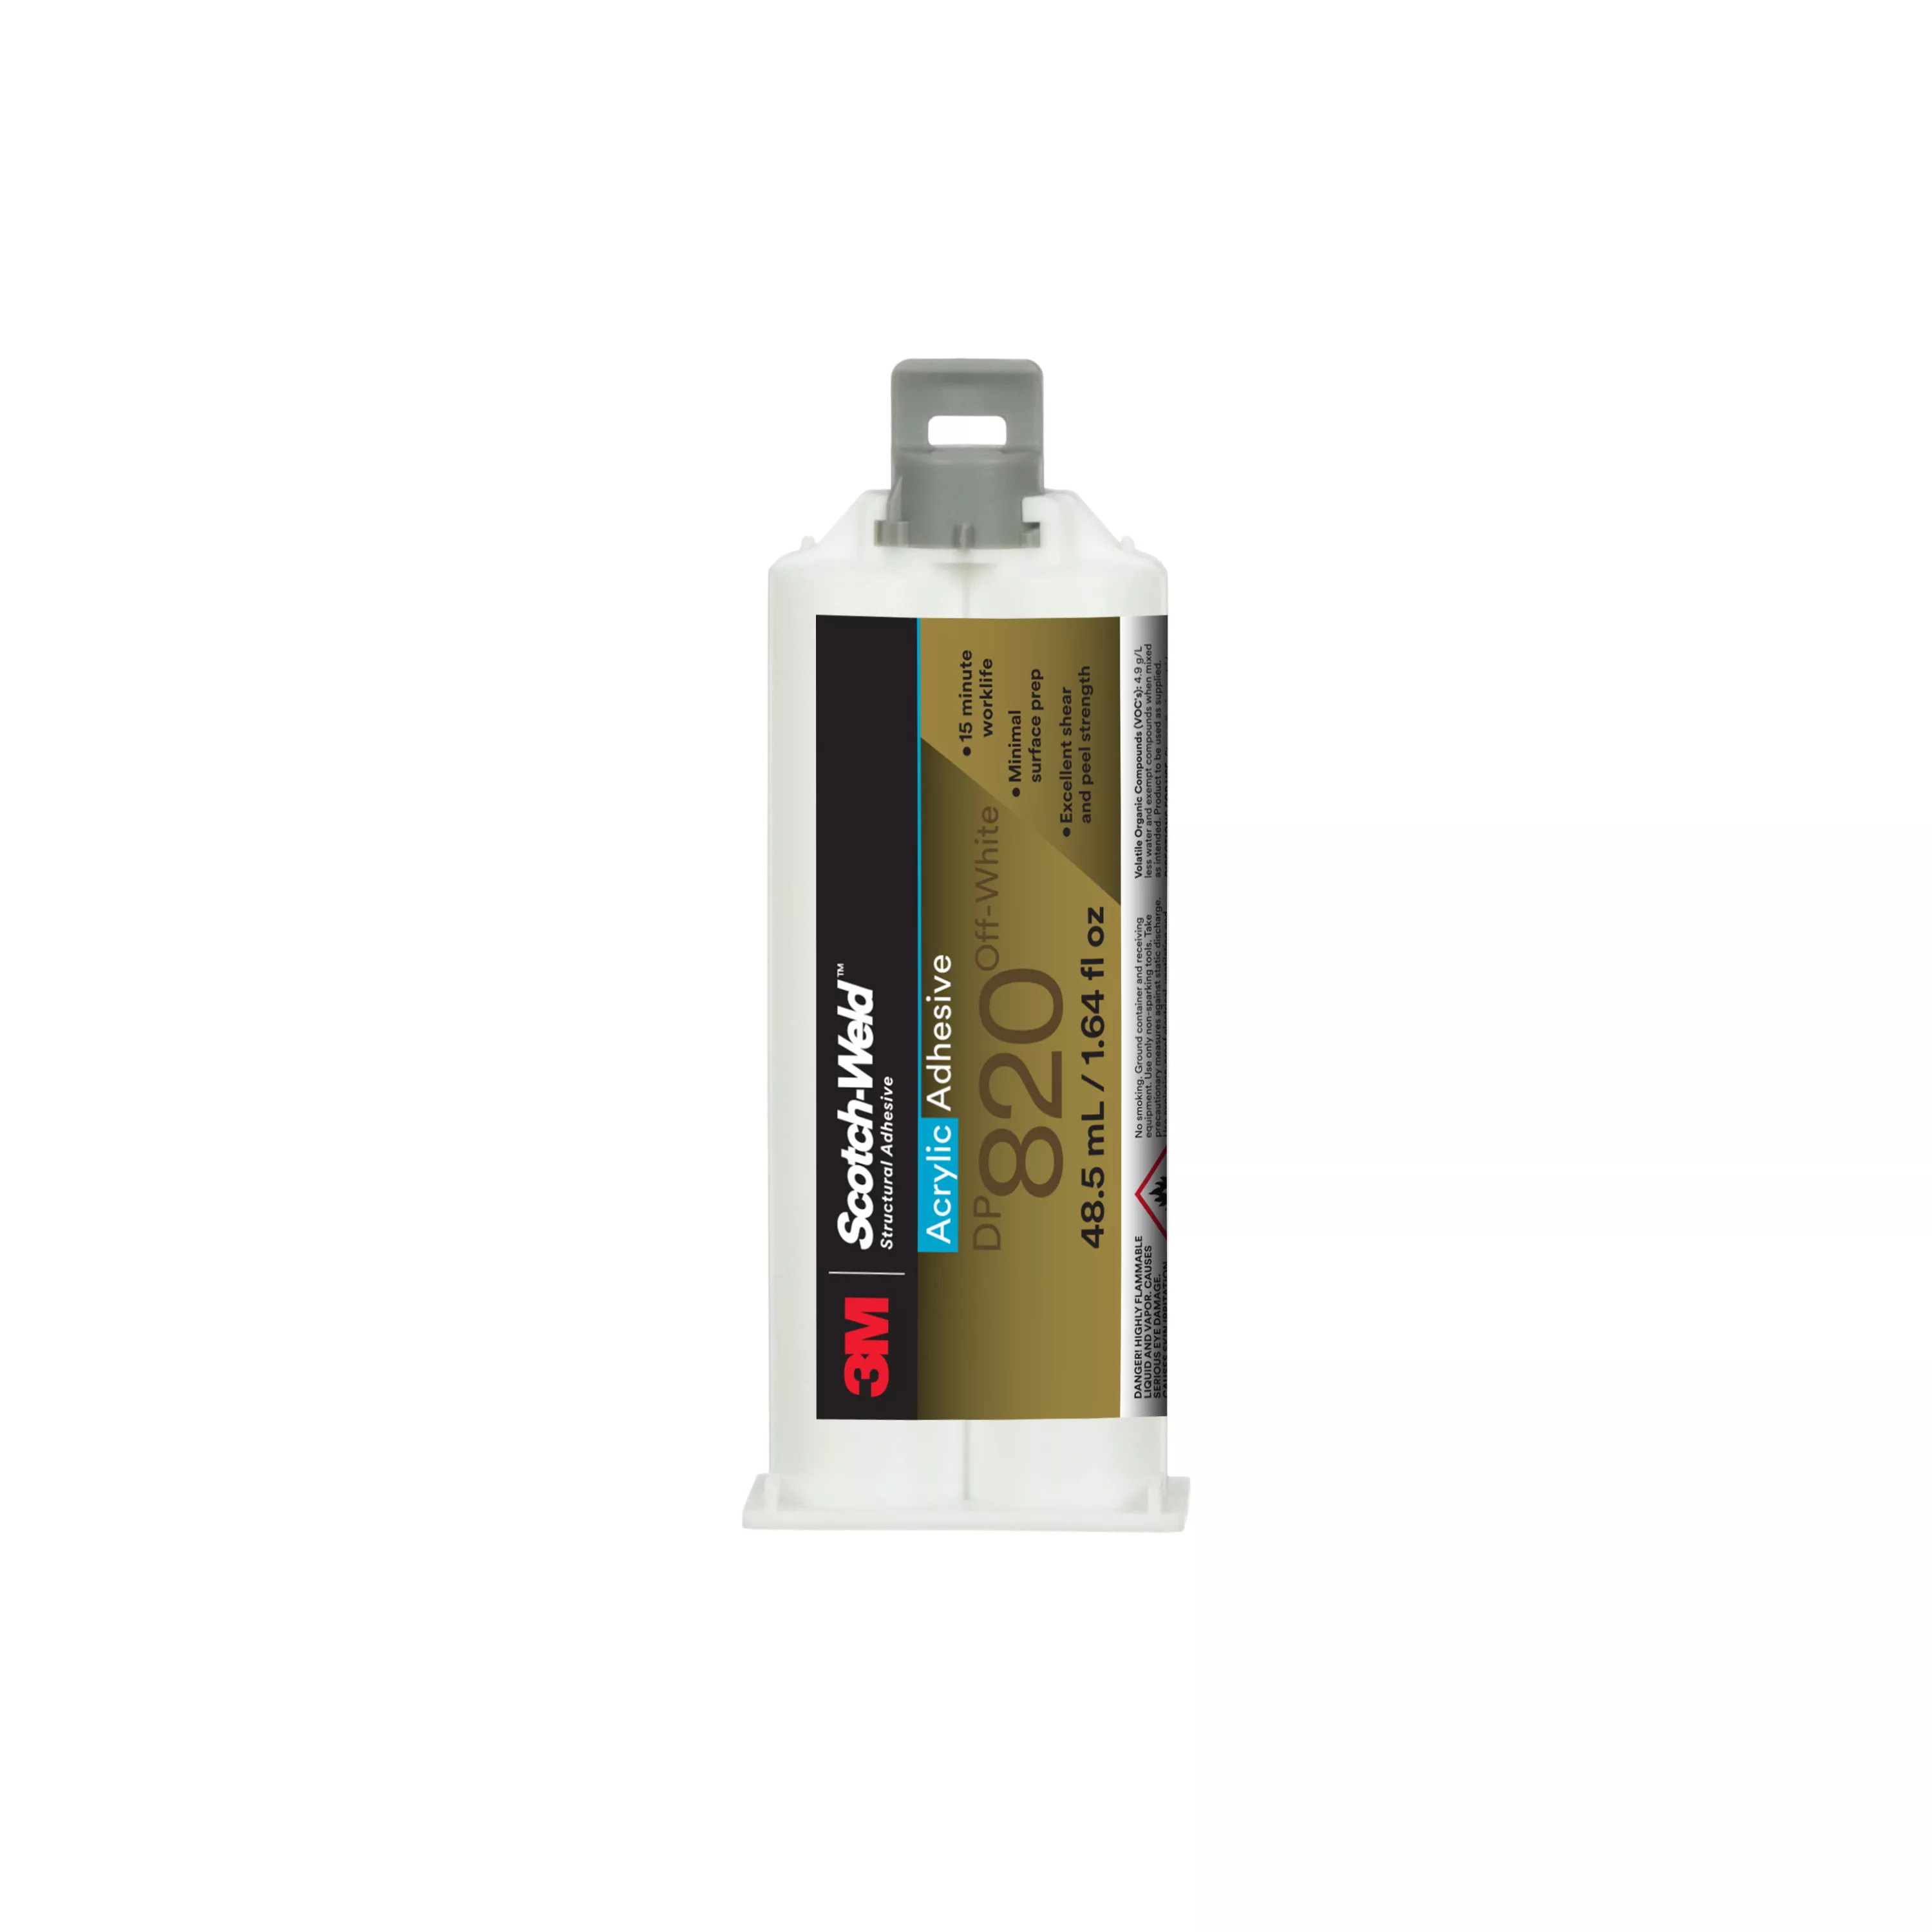 3M™ Scotch-Weld™ Acrylic Adhesive DP820, Off-White, 48.5 mL Duo-Pak,
12/Case